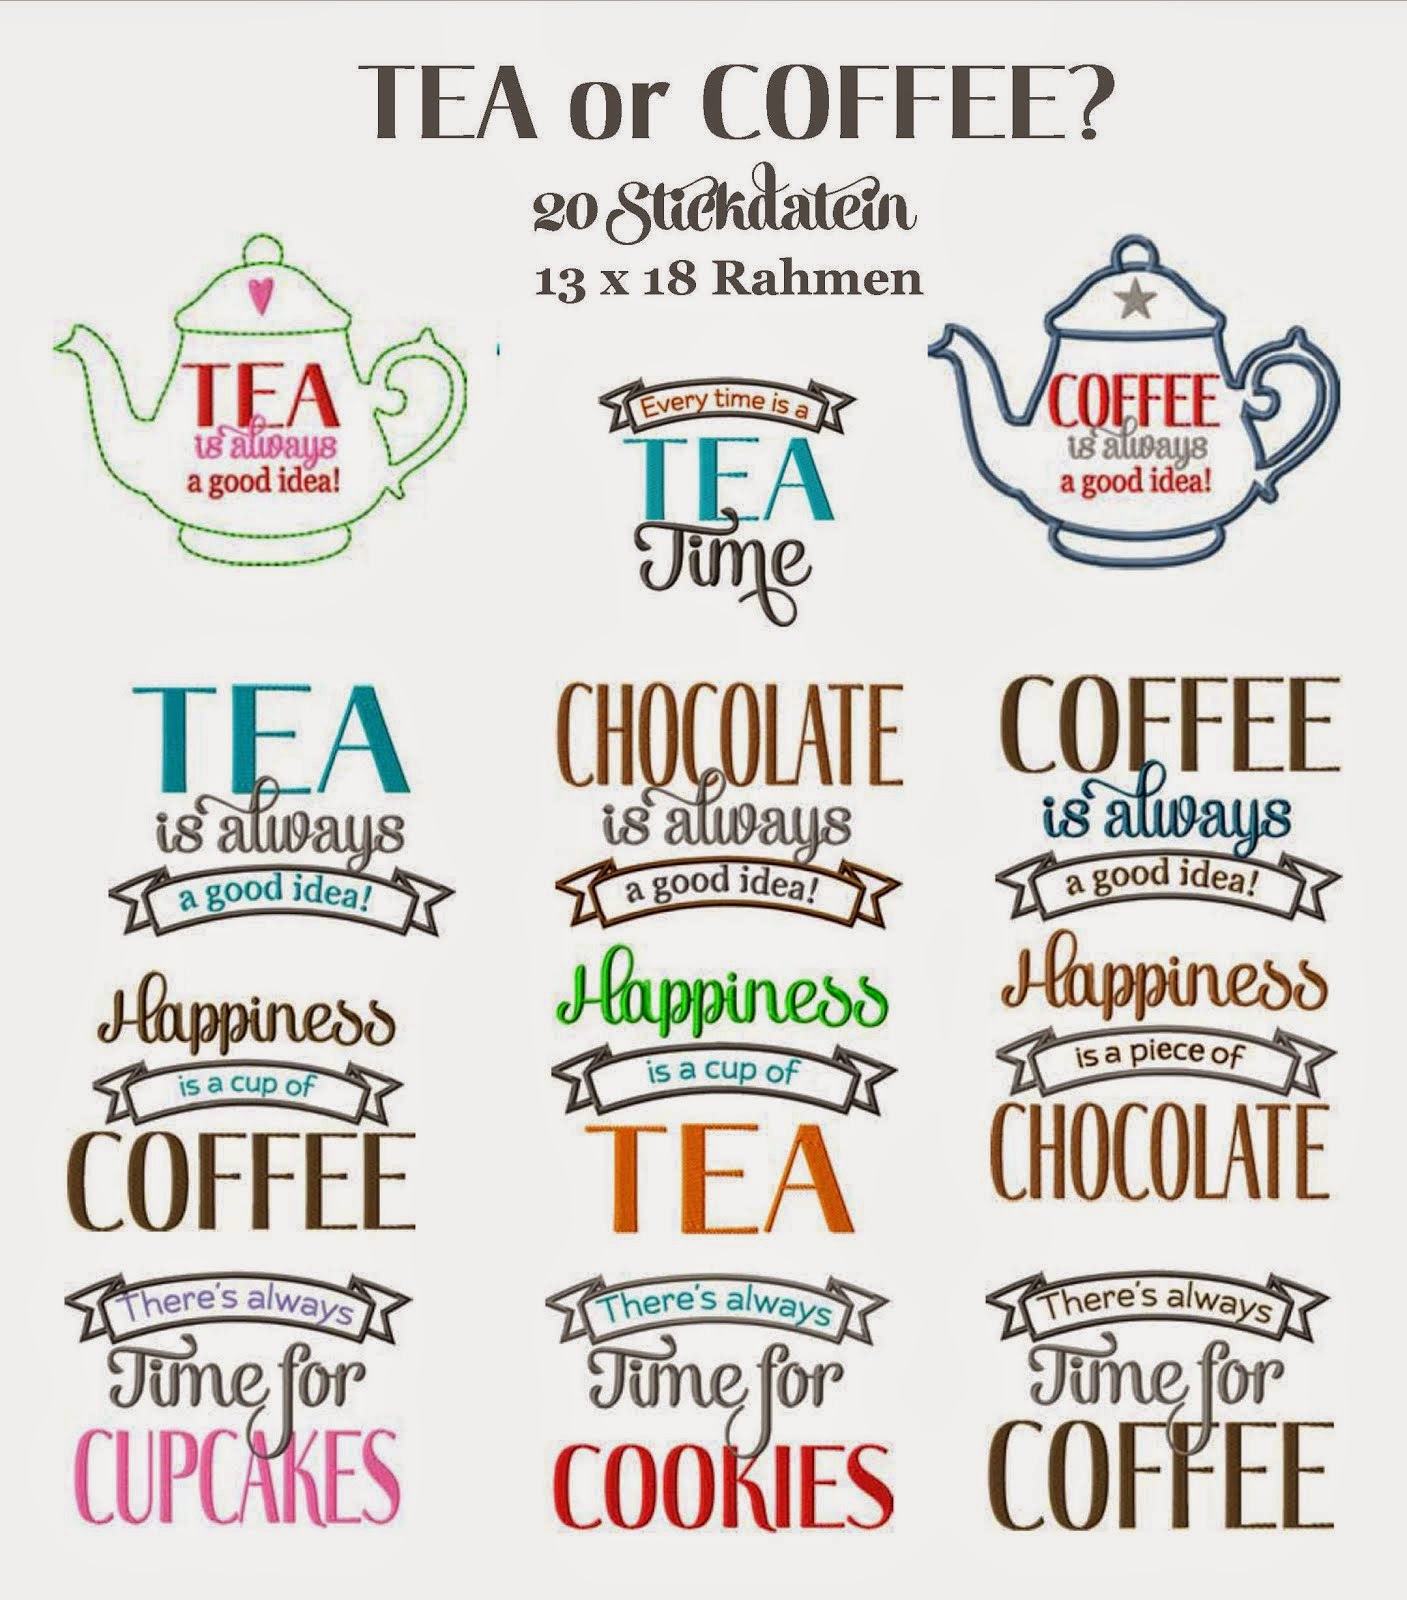 TEA or COFFEE